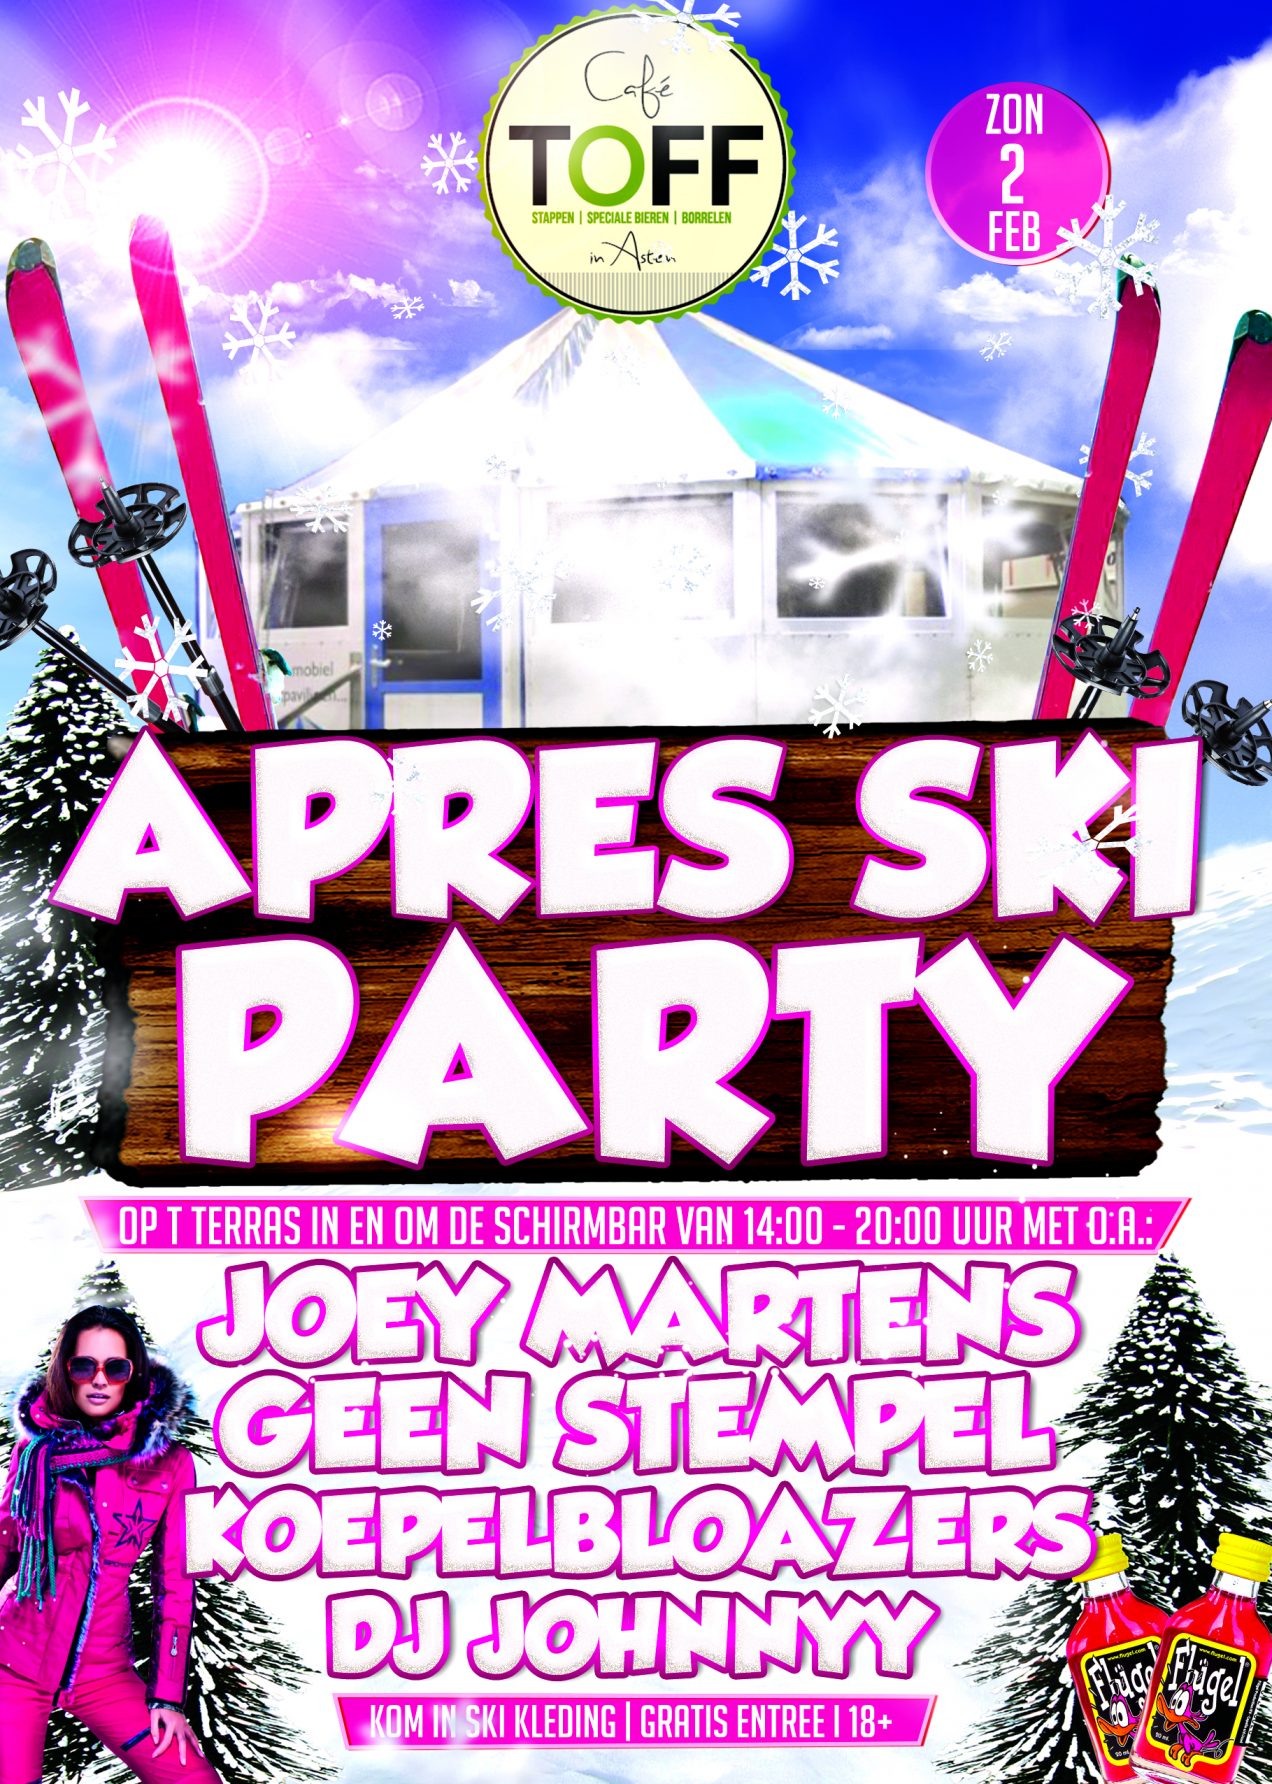 Apres Ski Party 2020 Poster Def Cafe Toff